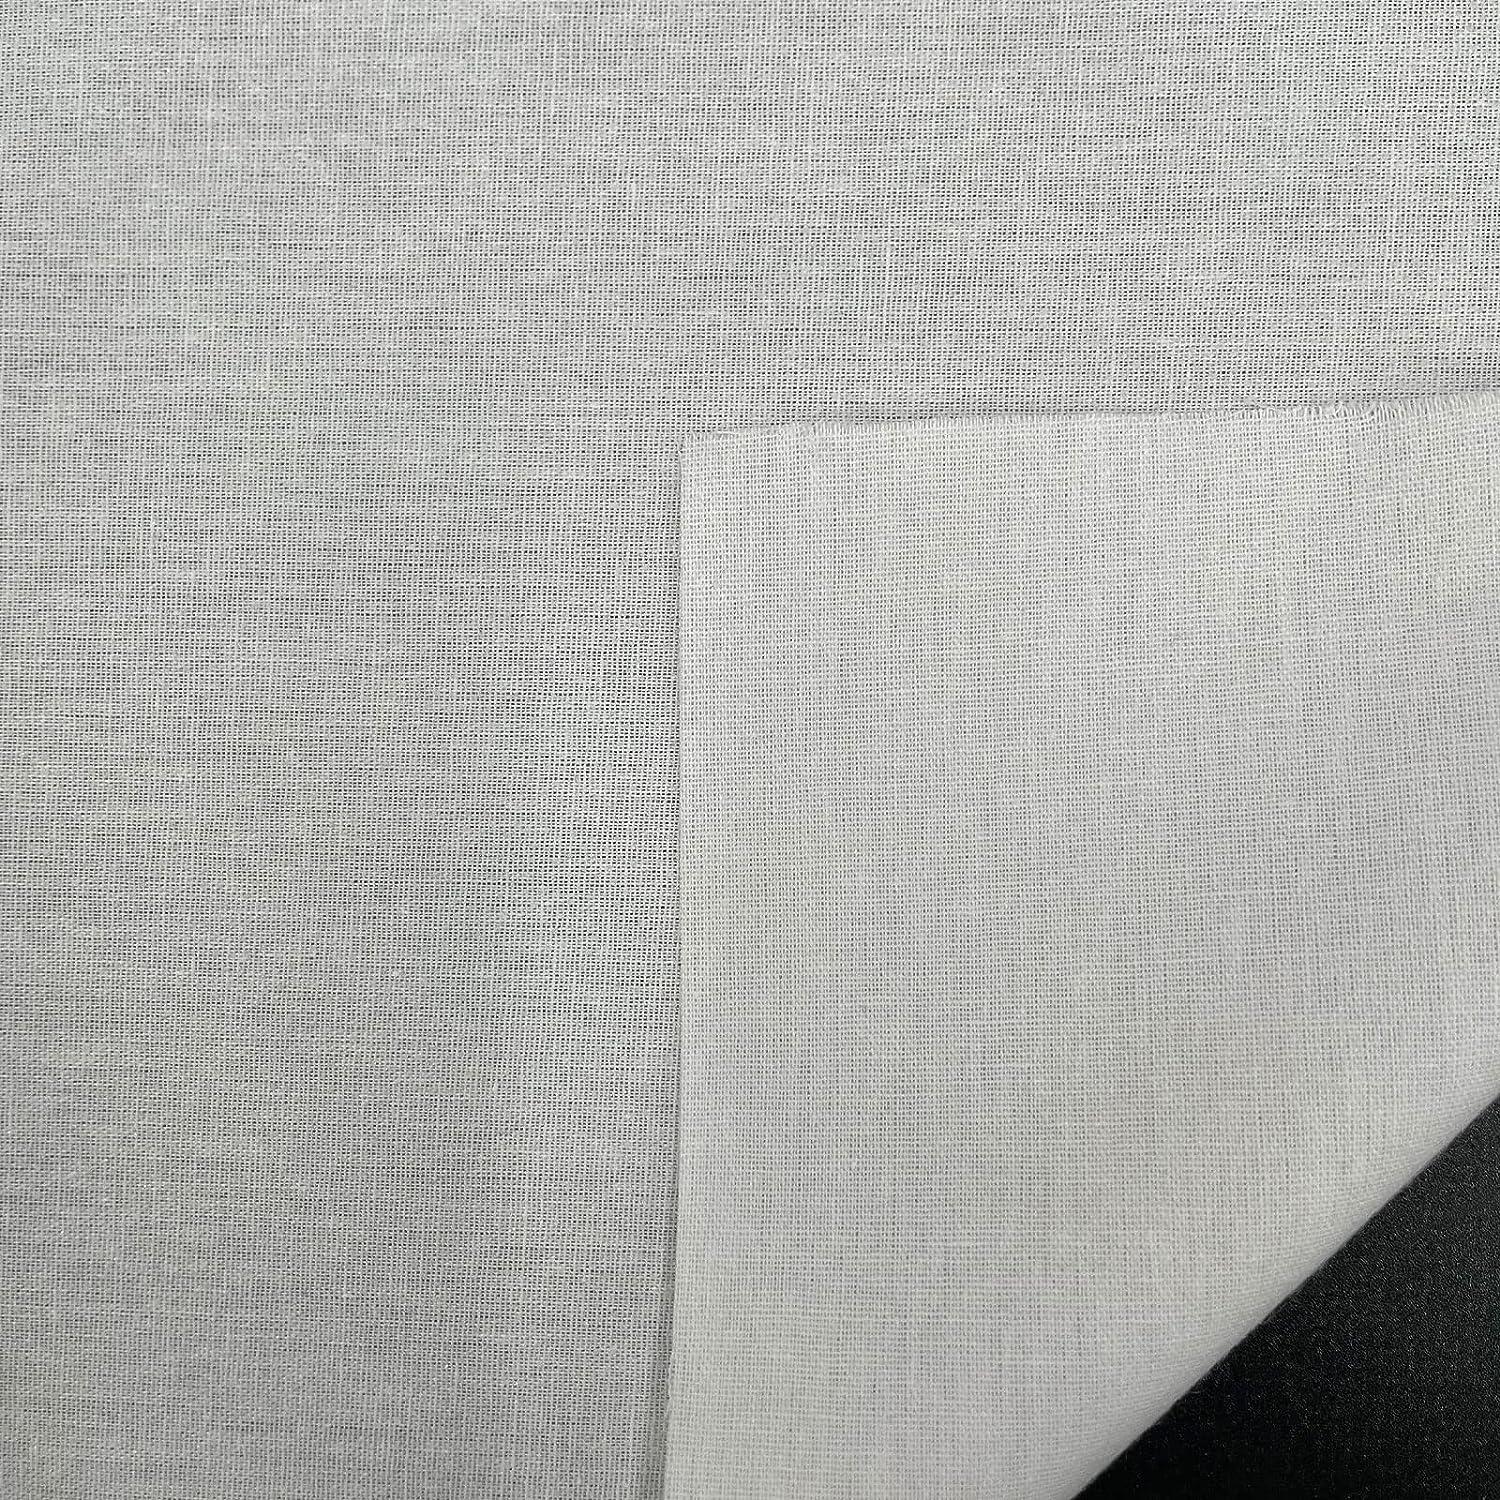 White Craft-Fuse Iron-On Craft Backing Interfacing